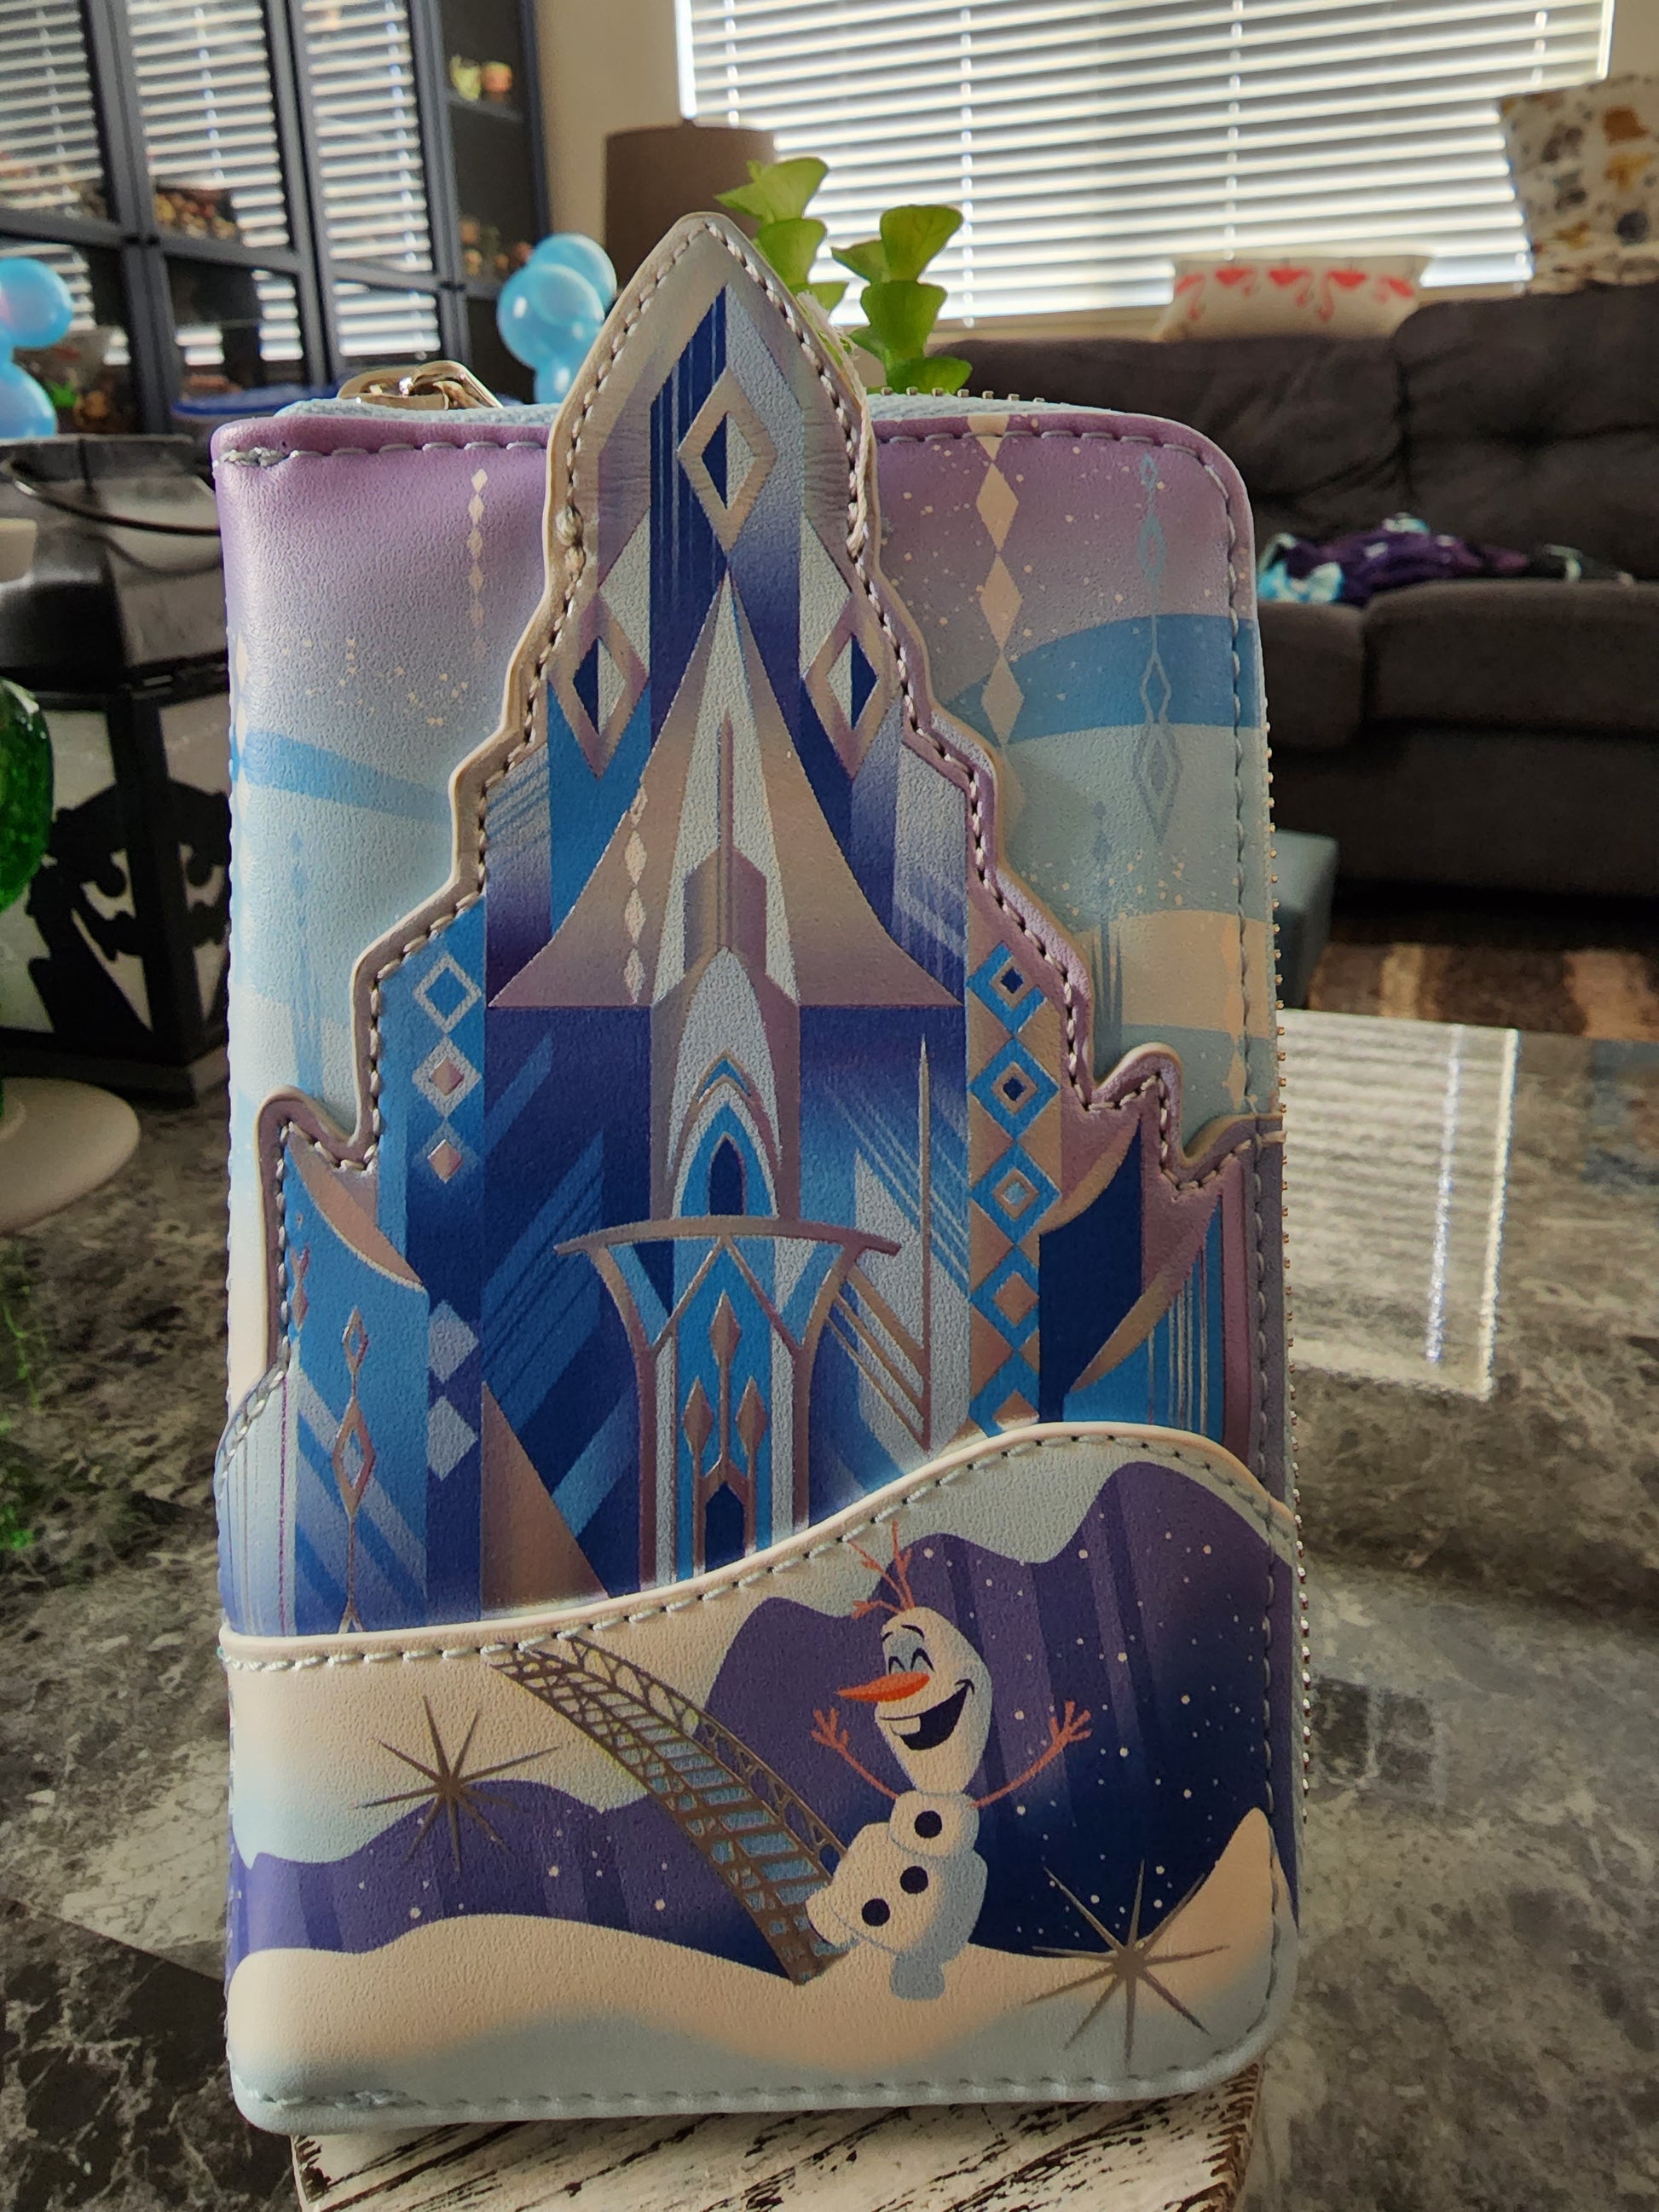 Frozen Princess Elsa Castle Crossbody Bag